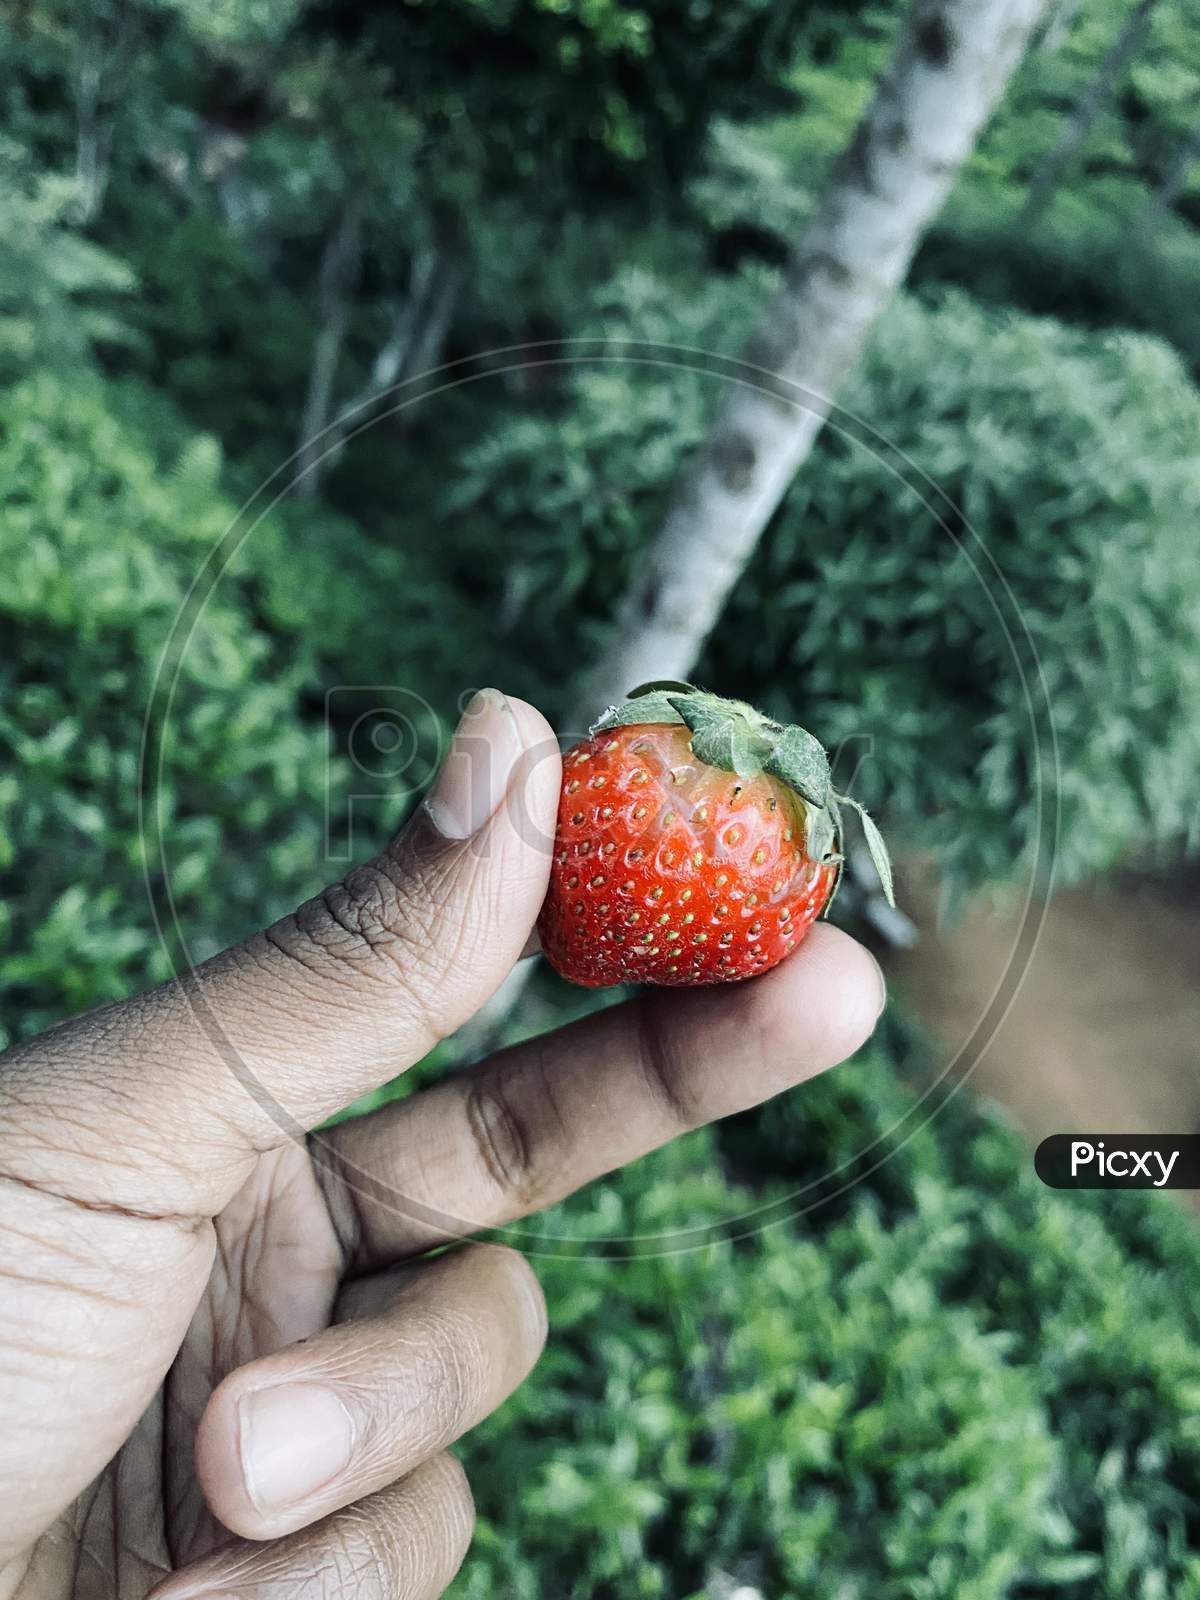 The Tasty Strawberry